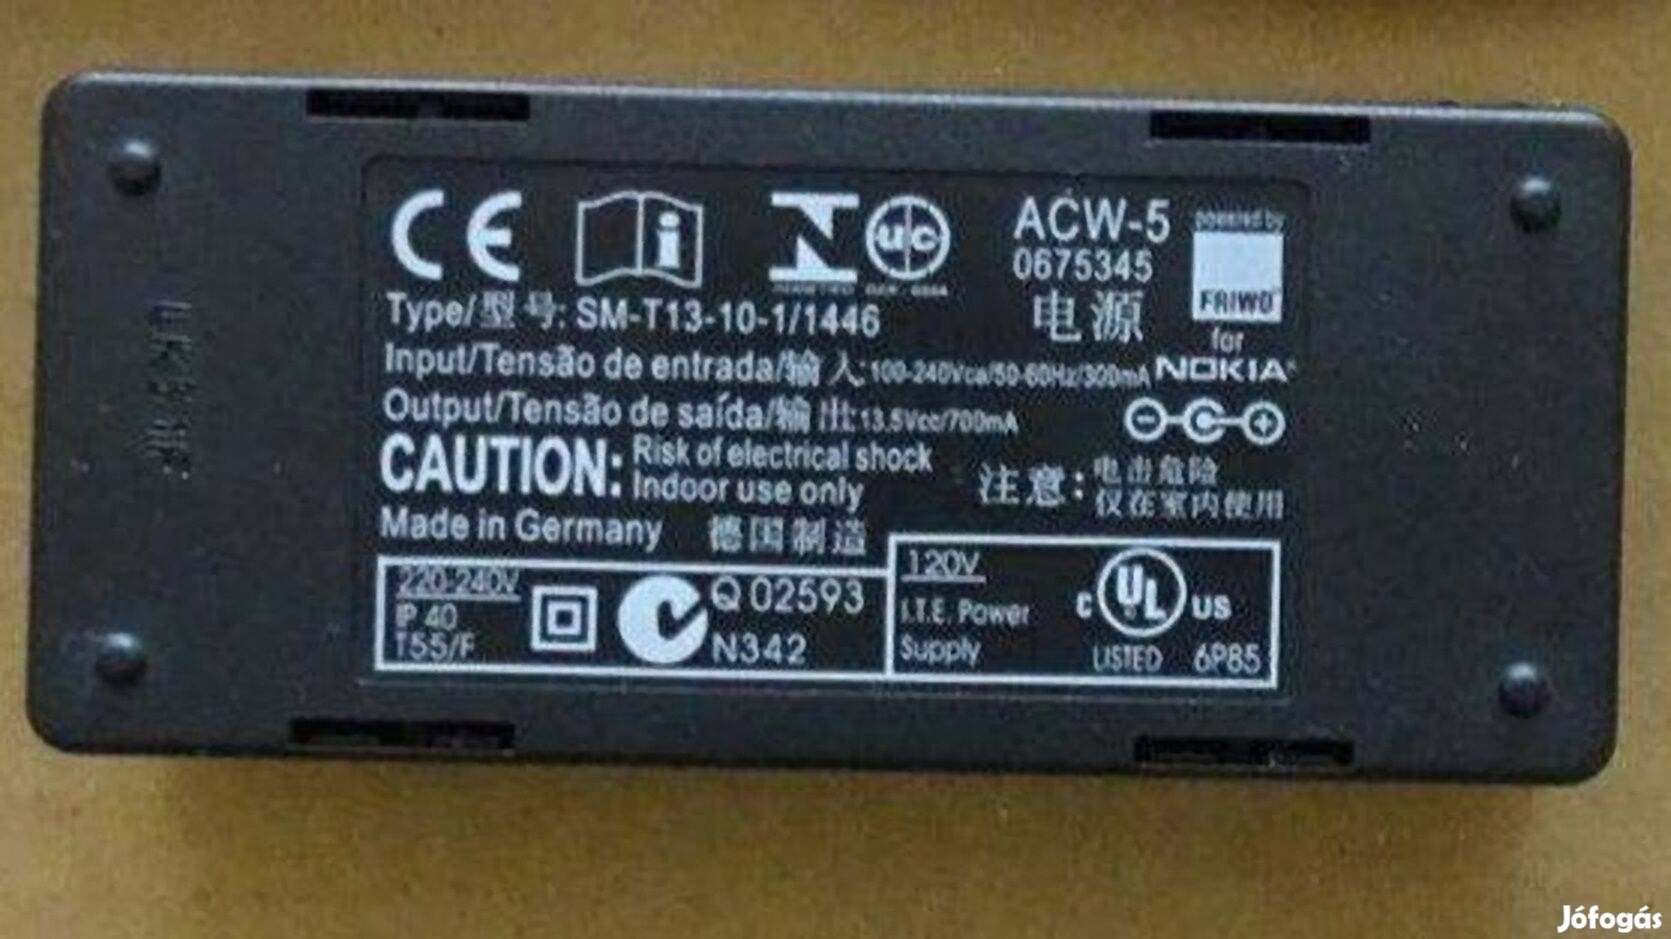 SM-T13-10-1/1446 adapter (Nokia)